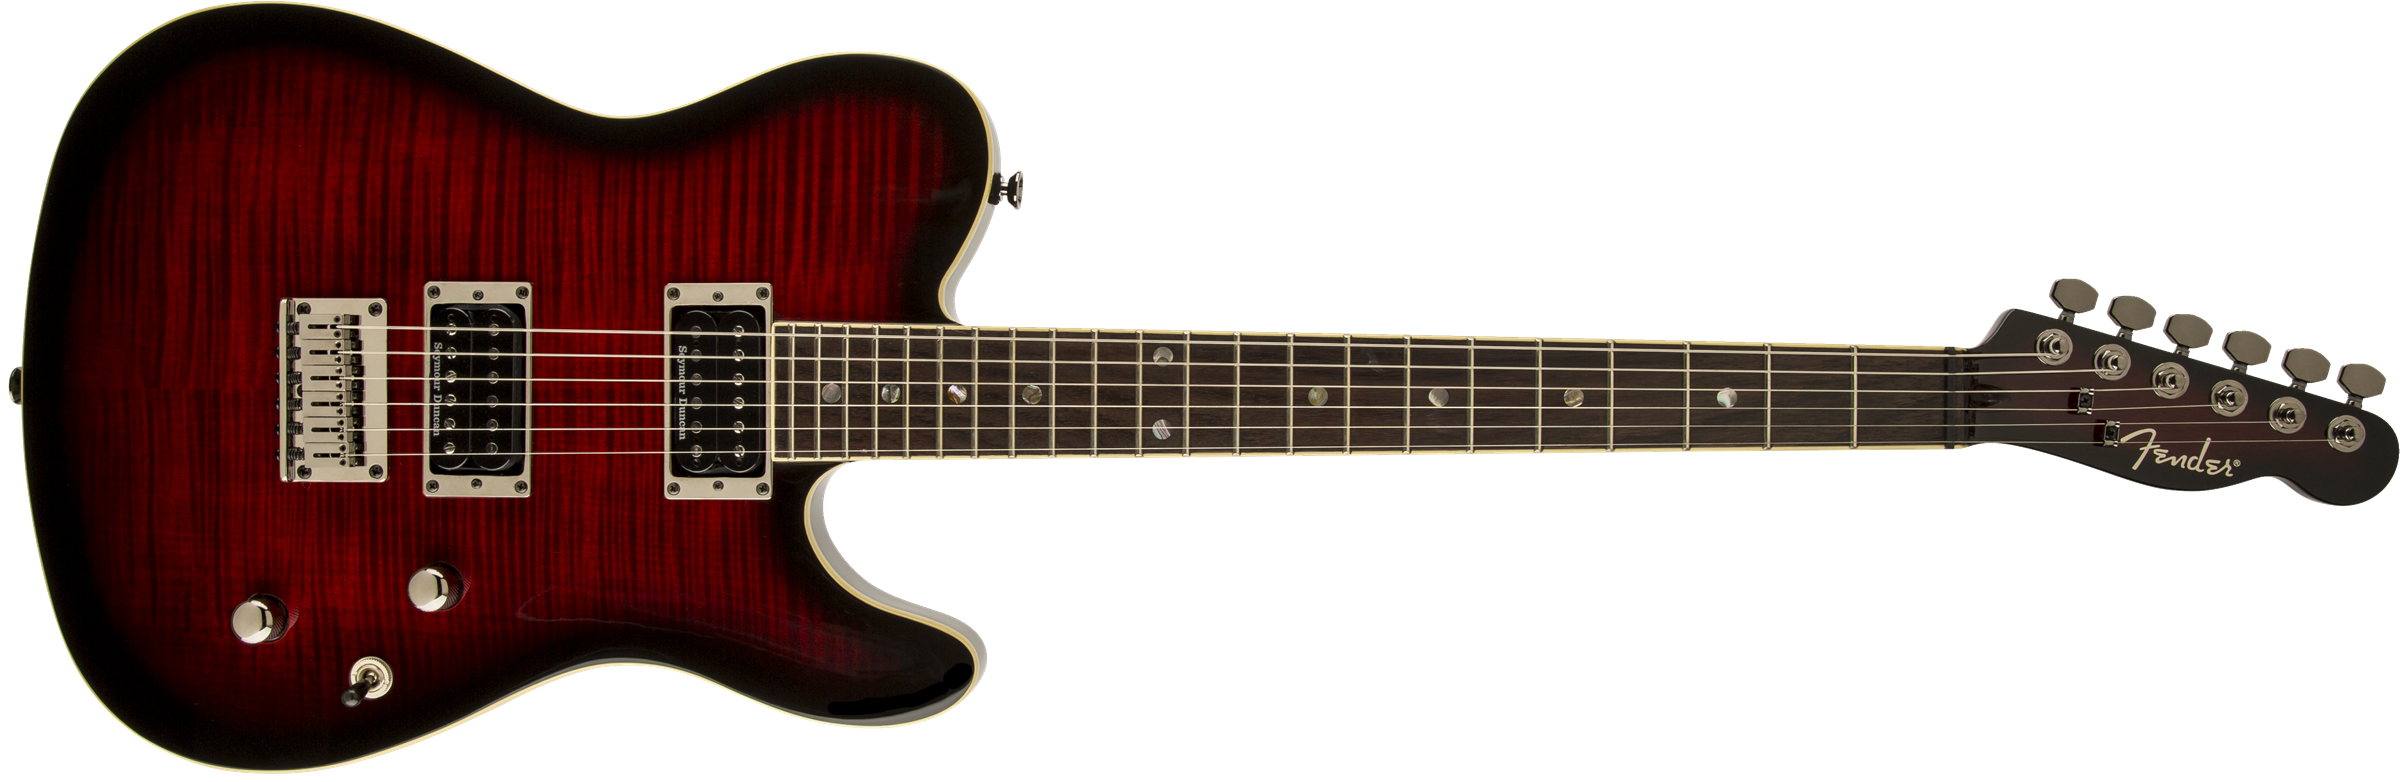 Fender Telecaster Korean Special Edition Custom Fmt (lau) - Black Cherry Burst - Guitarra eléctrica con forma de tel - Variation 1